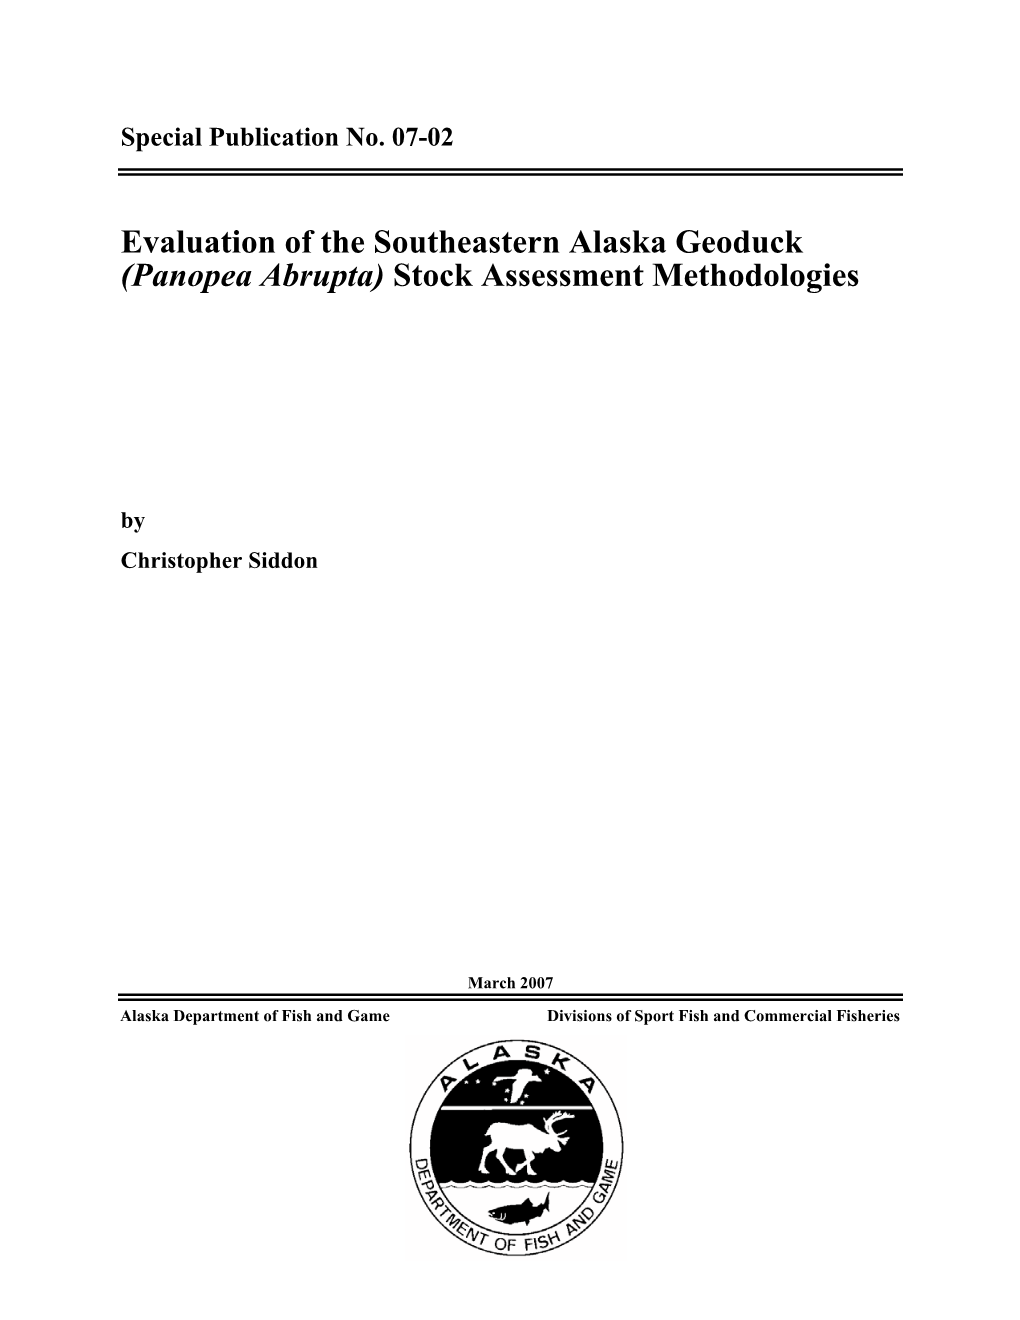 Evaluation of the Southeastern Alaska Geoduck (Panopea Abrupta) Stock Assessment Methodologies